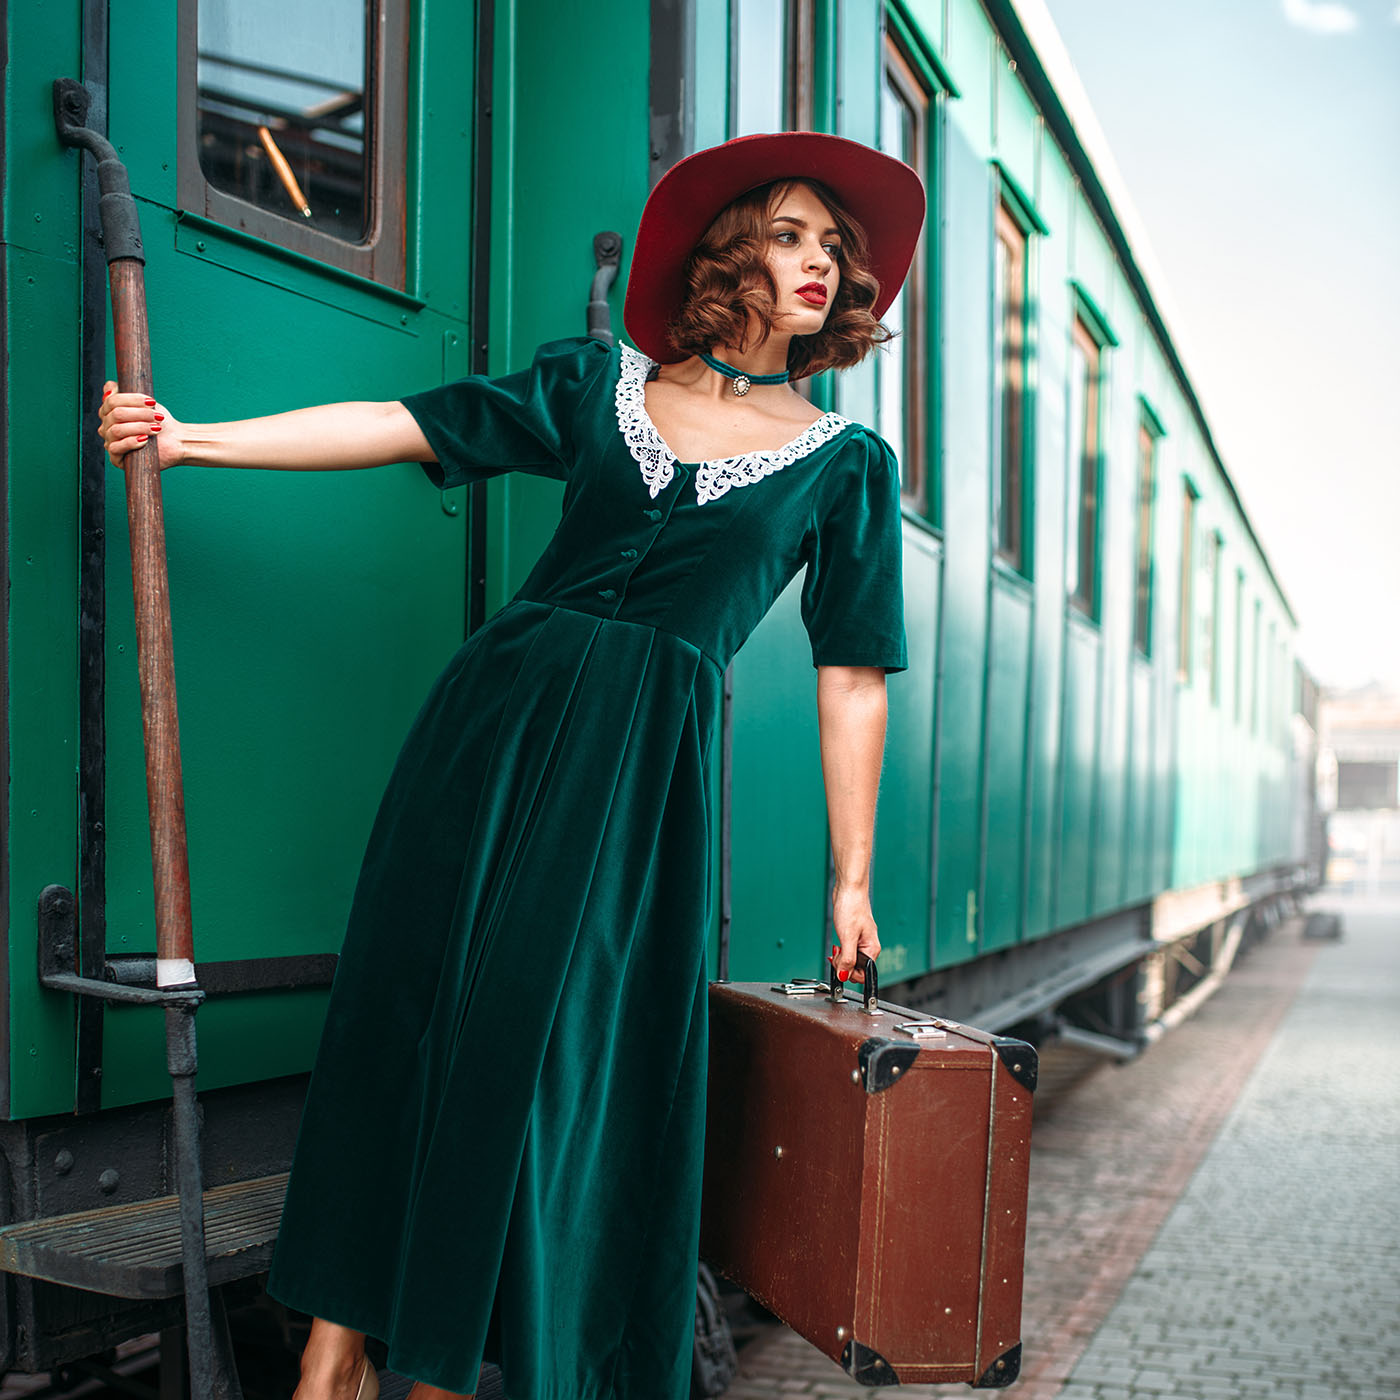 Woman in red hat on vintage steam locomotive. Old train. Railway engine, railroad journey